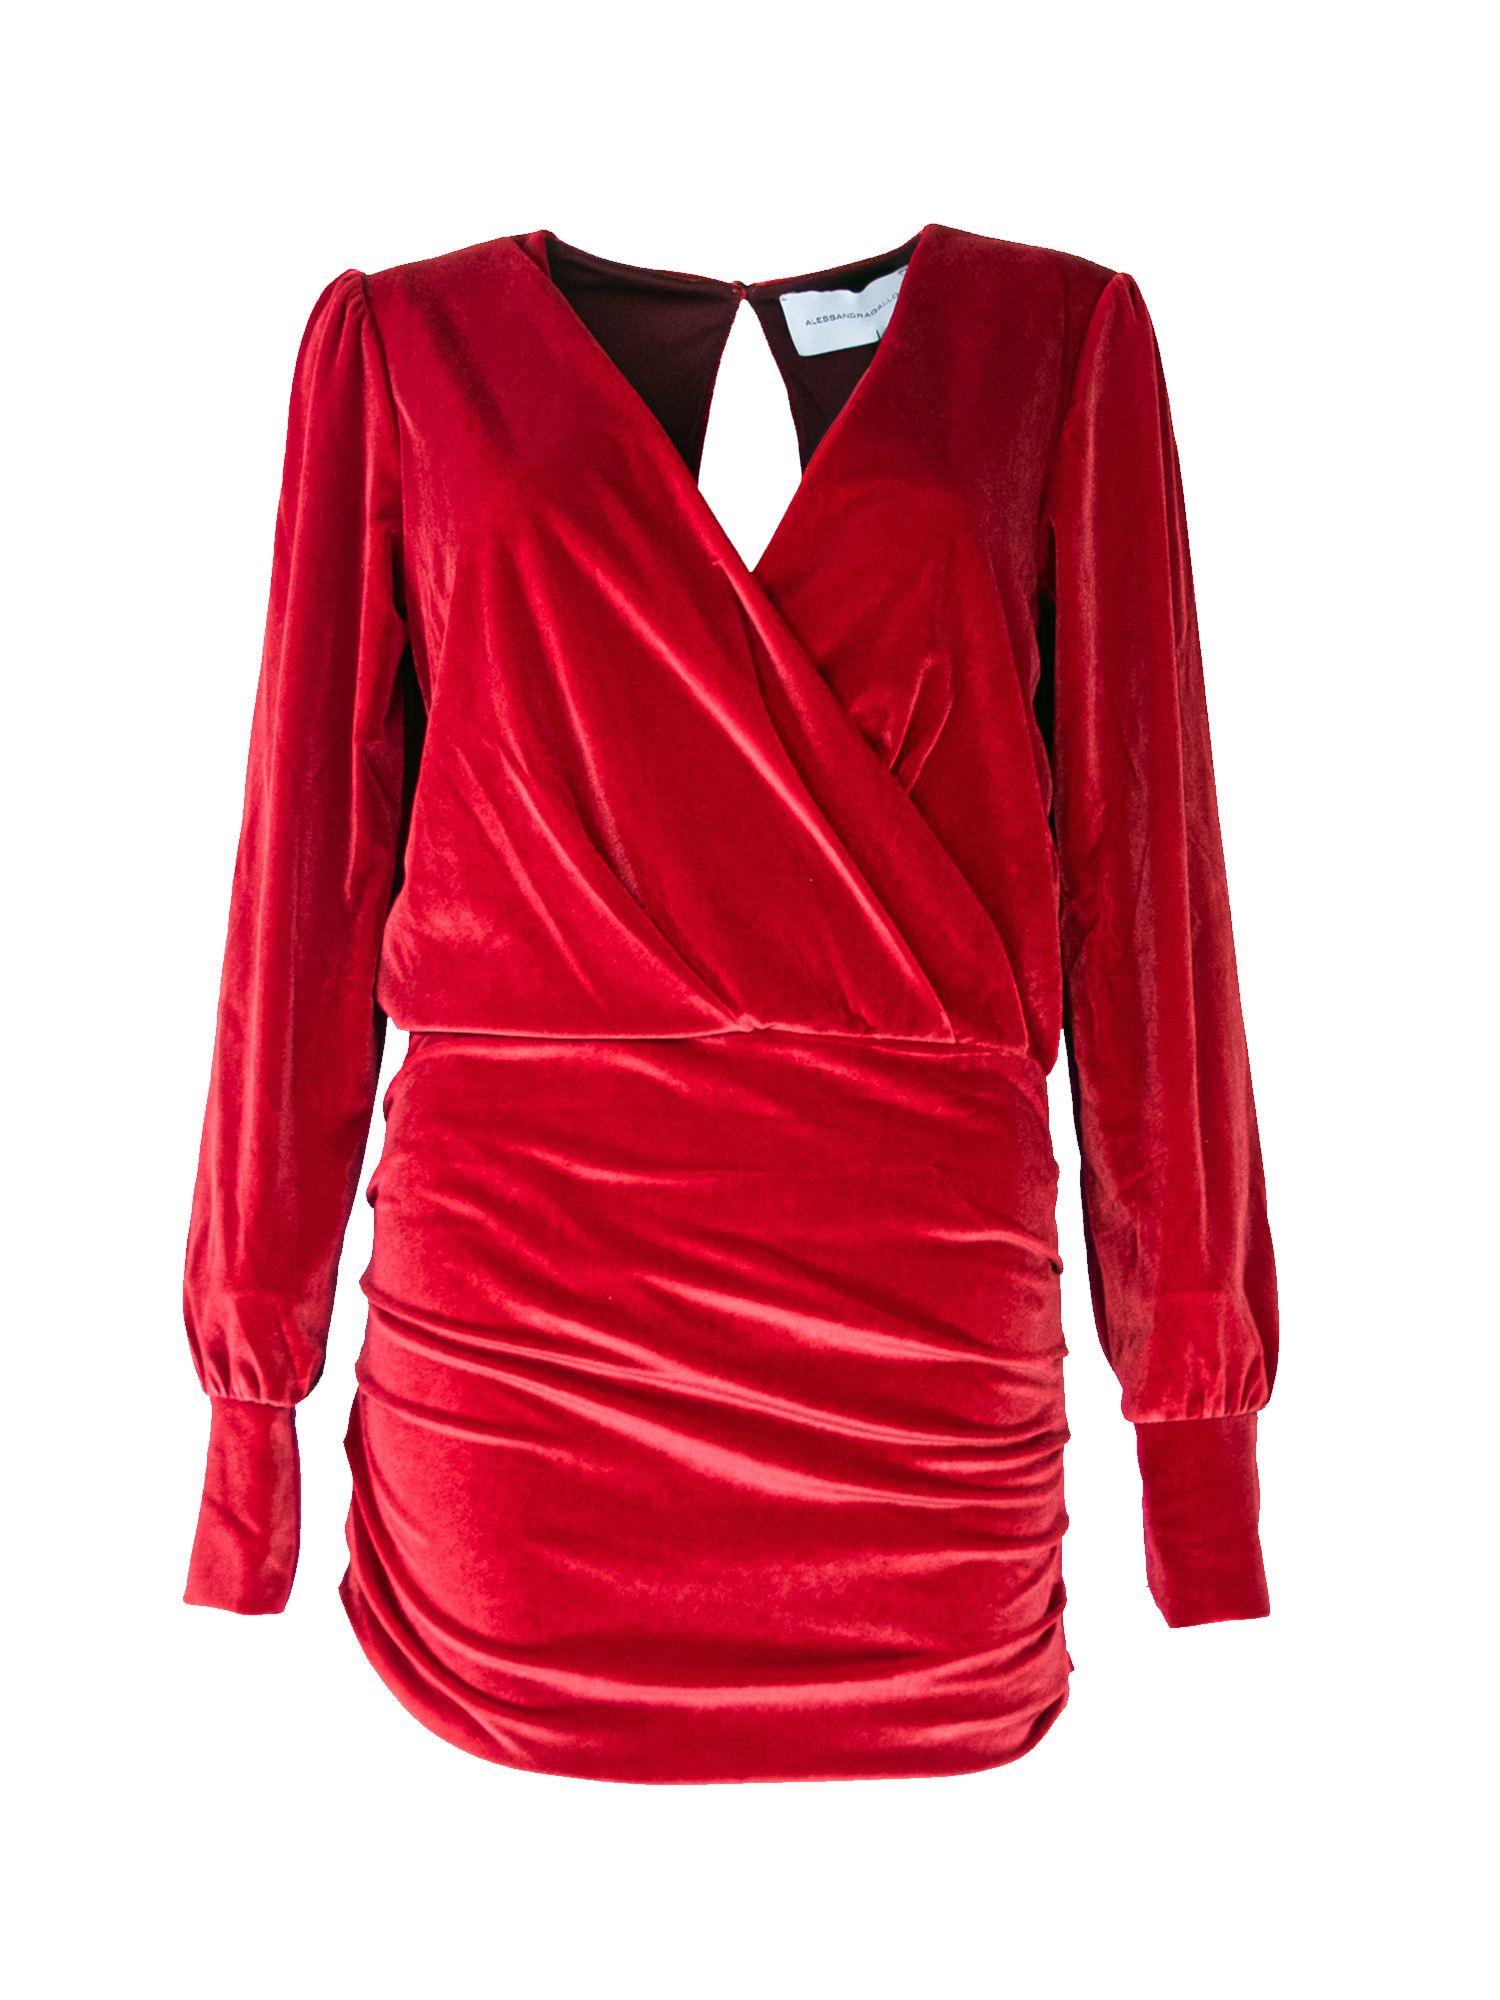 ZOE - short dress in red chenille